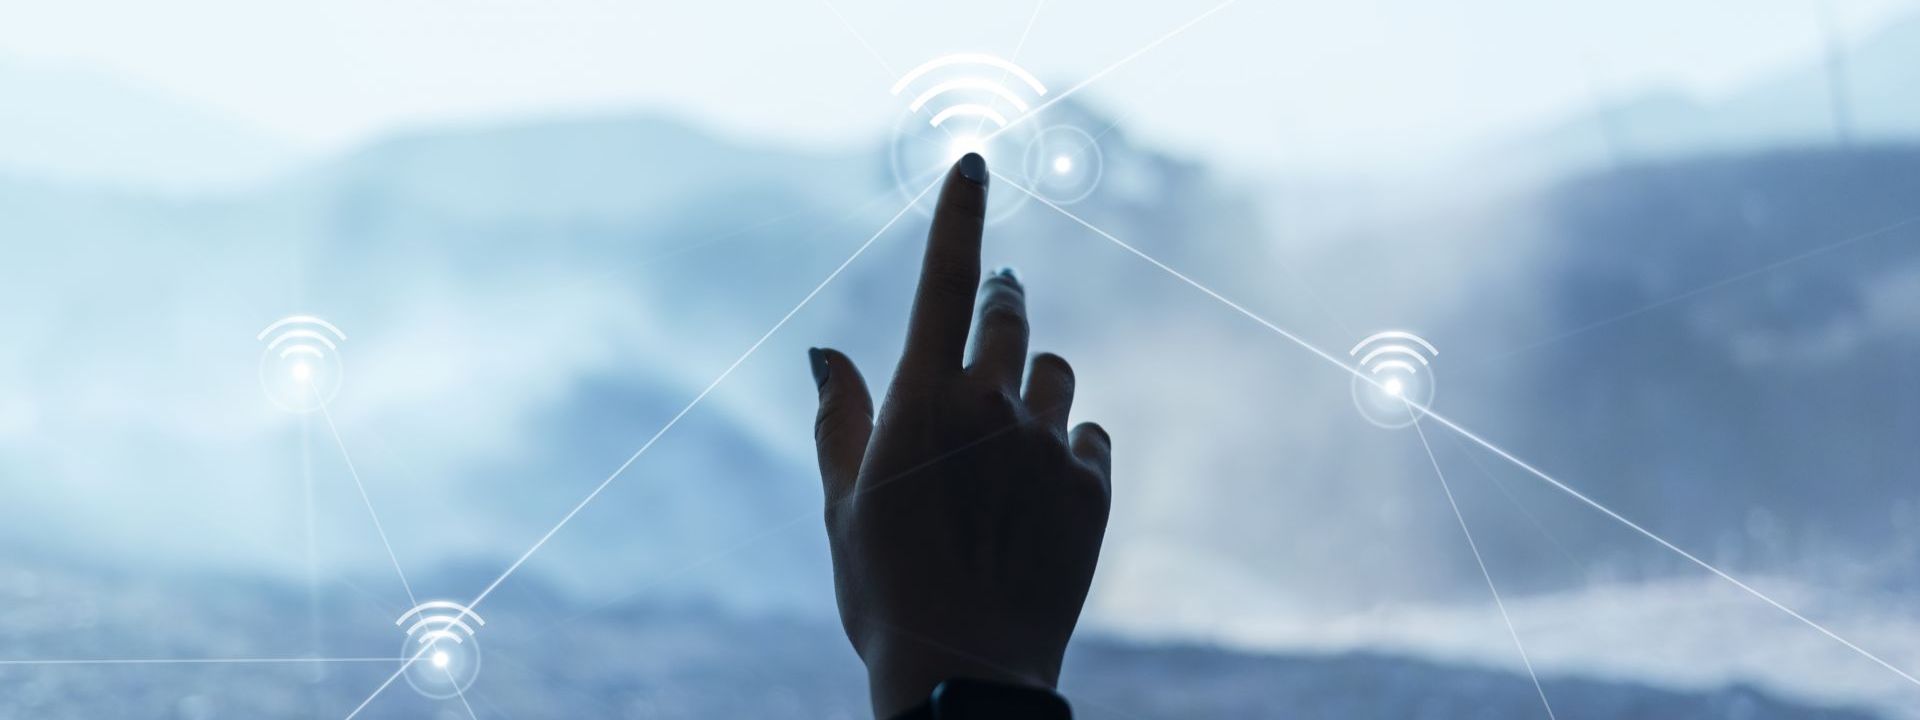 digital communication technology background with hand touching virtual screen digital remix scaled e1633449021409